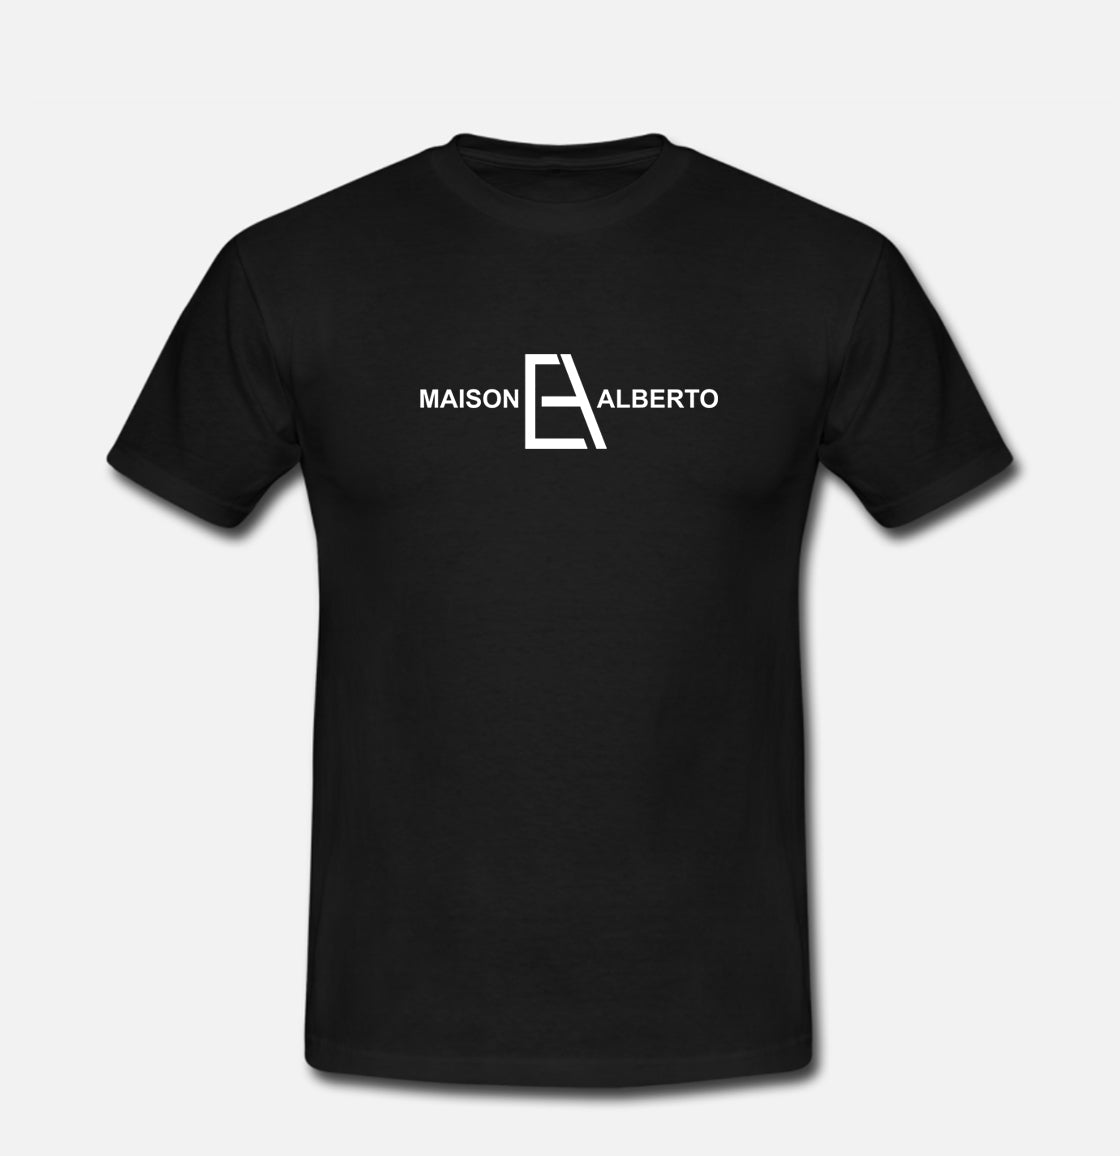 MAISON ALBERTO T-Shirt